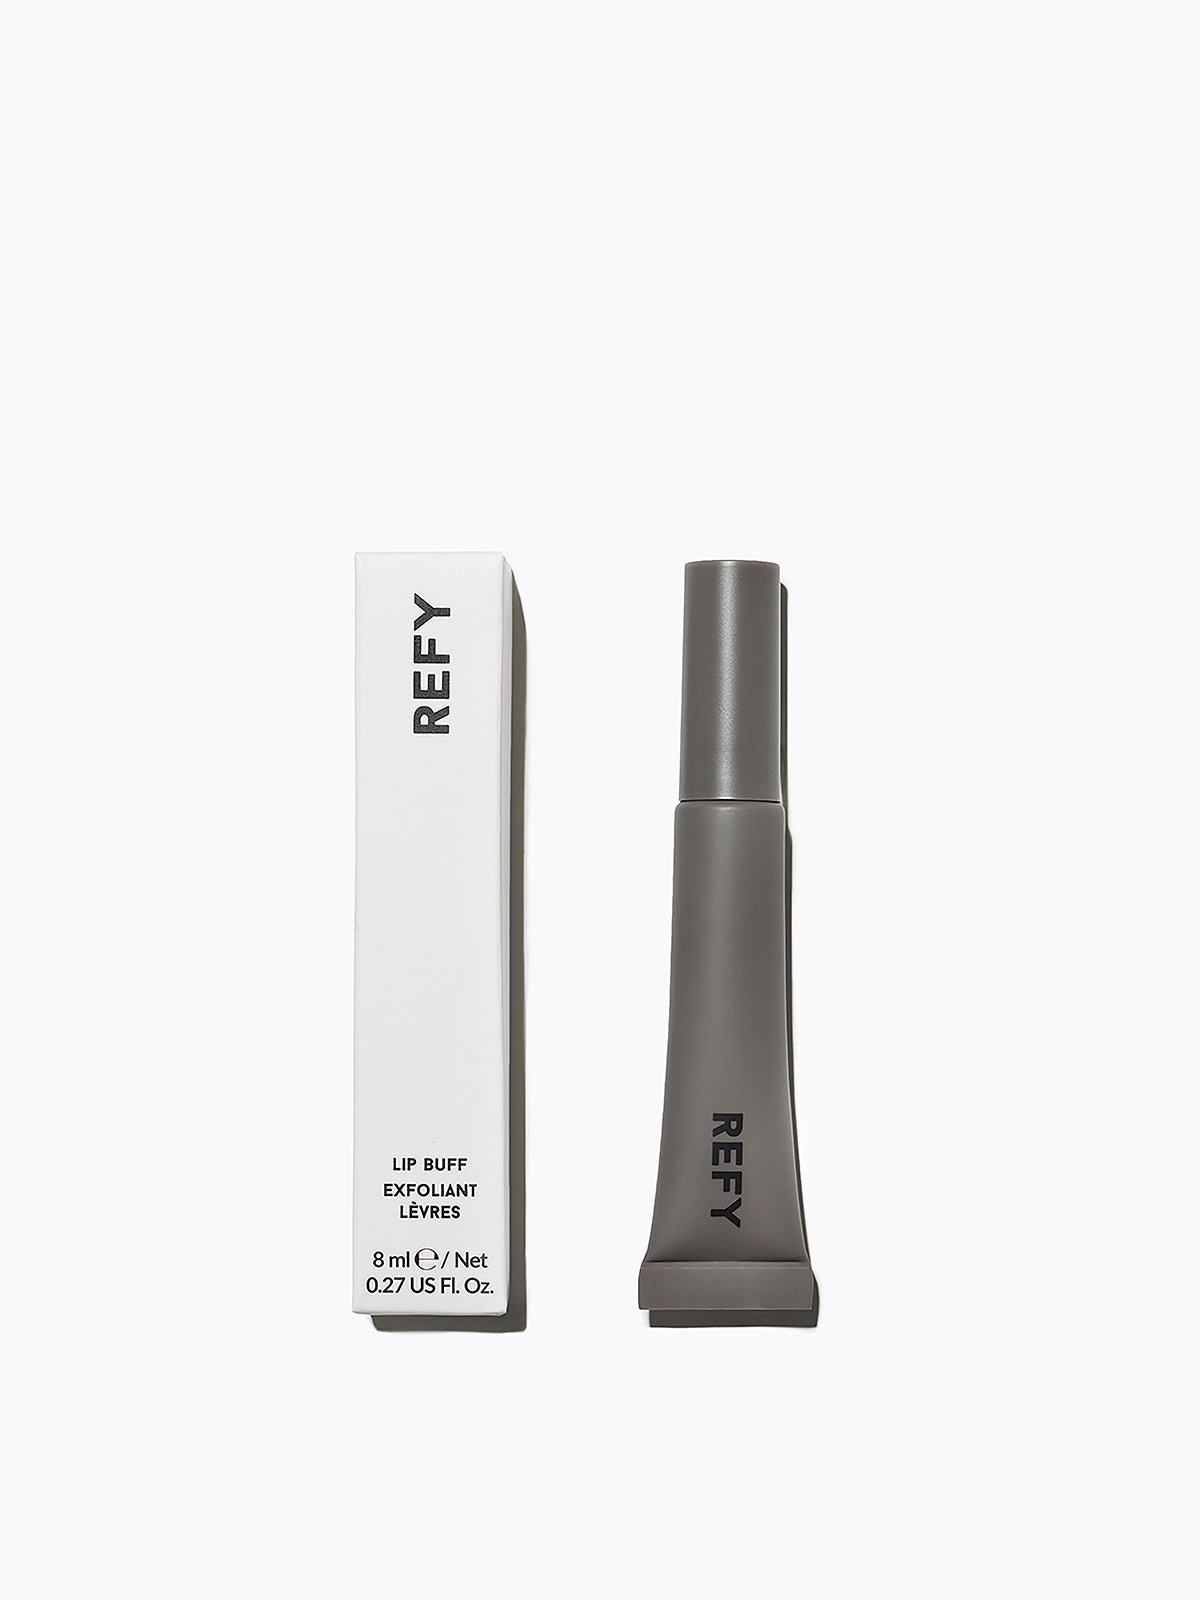 REFY Lip Buff Packaging